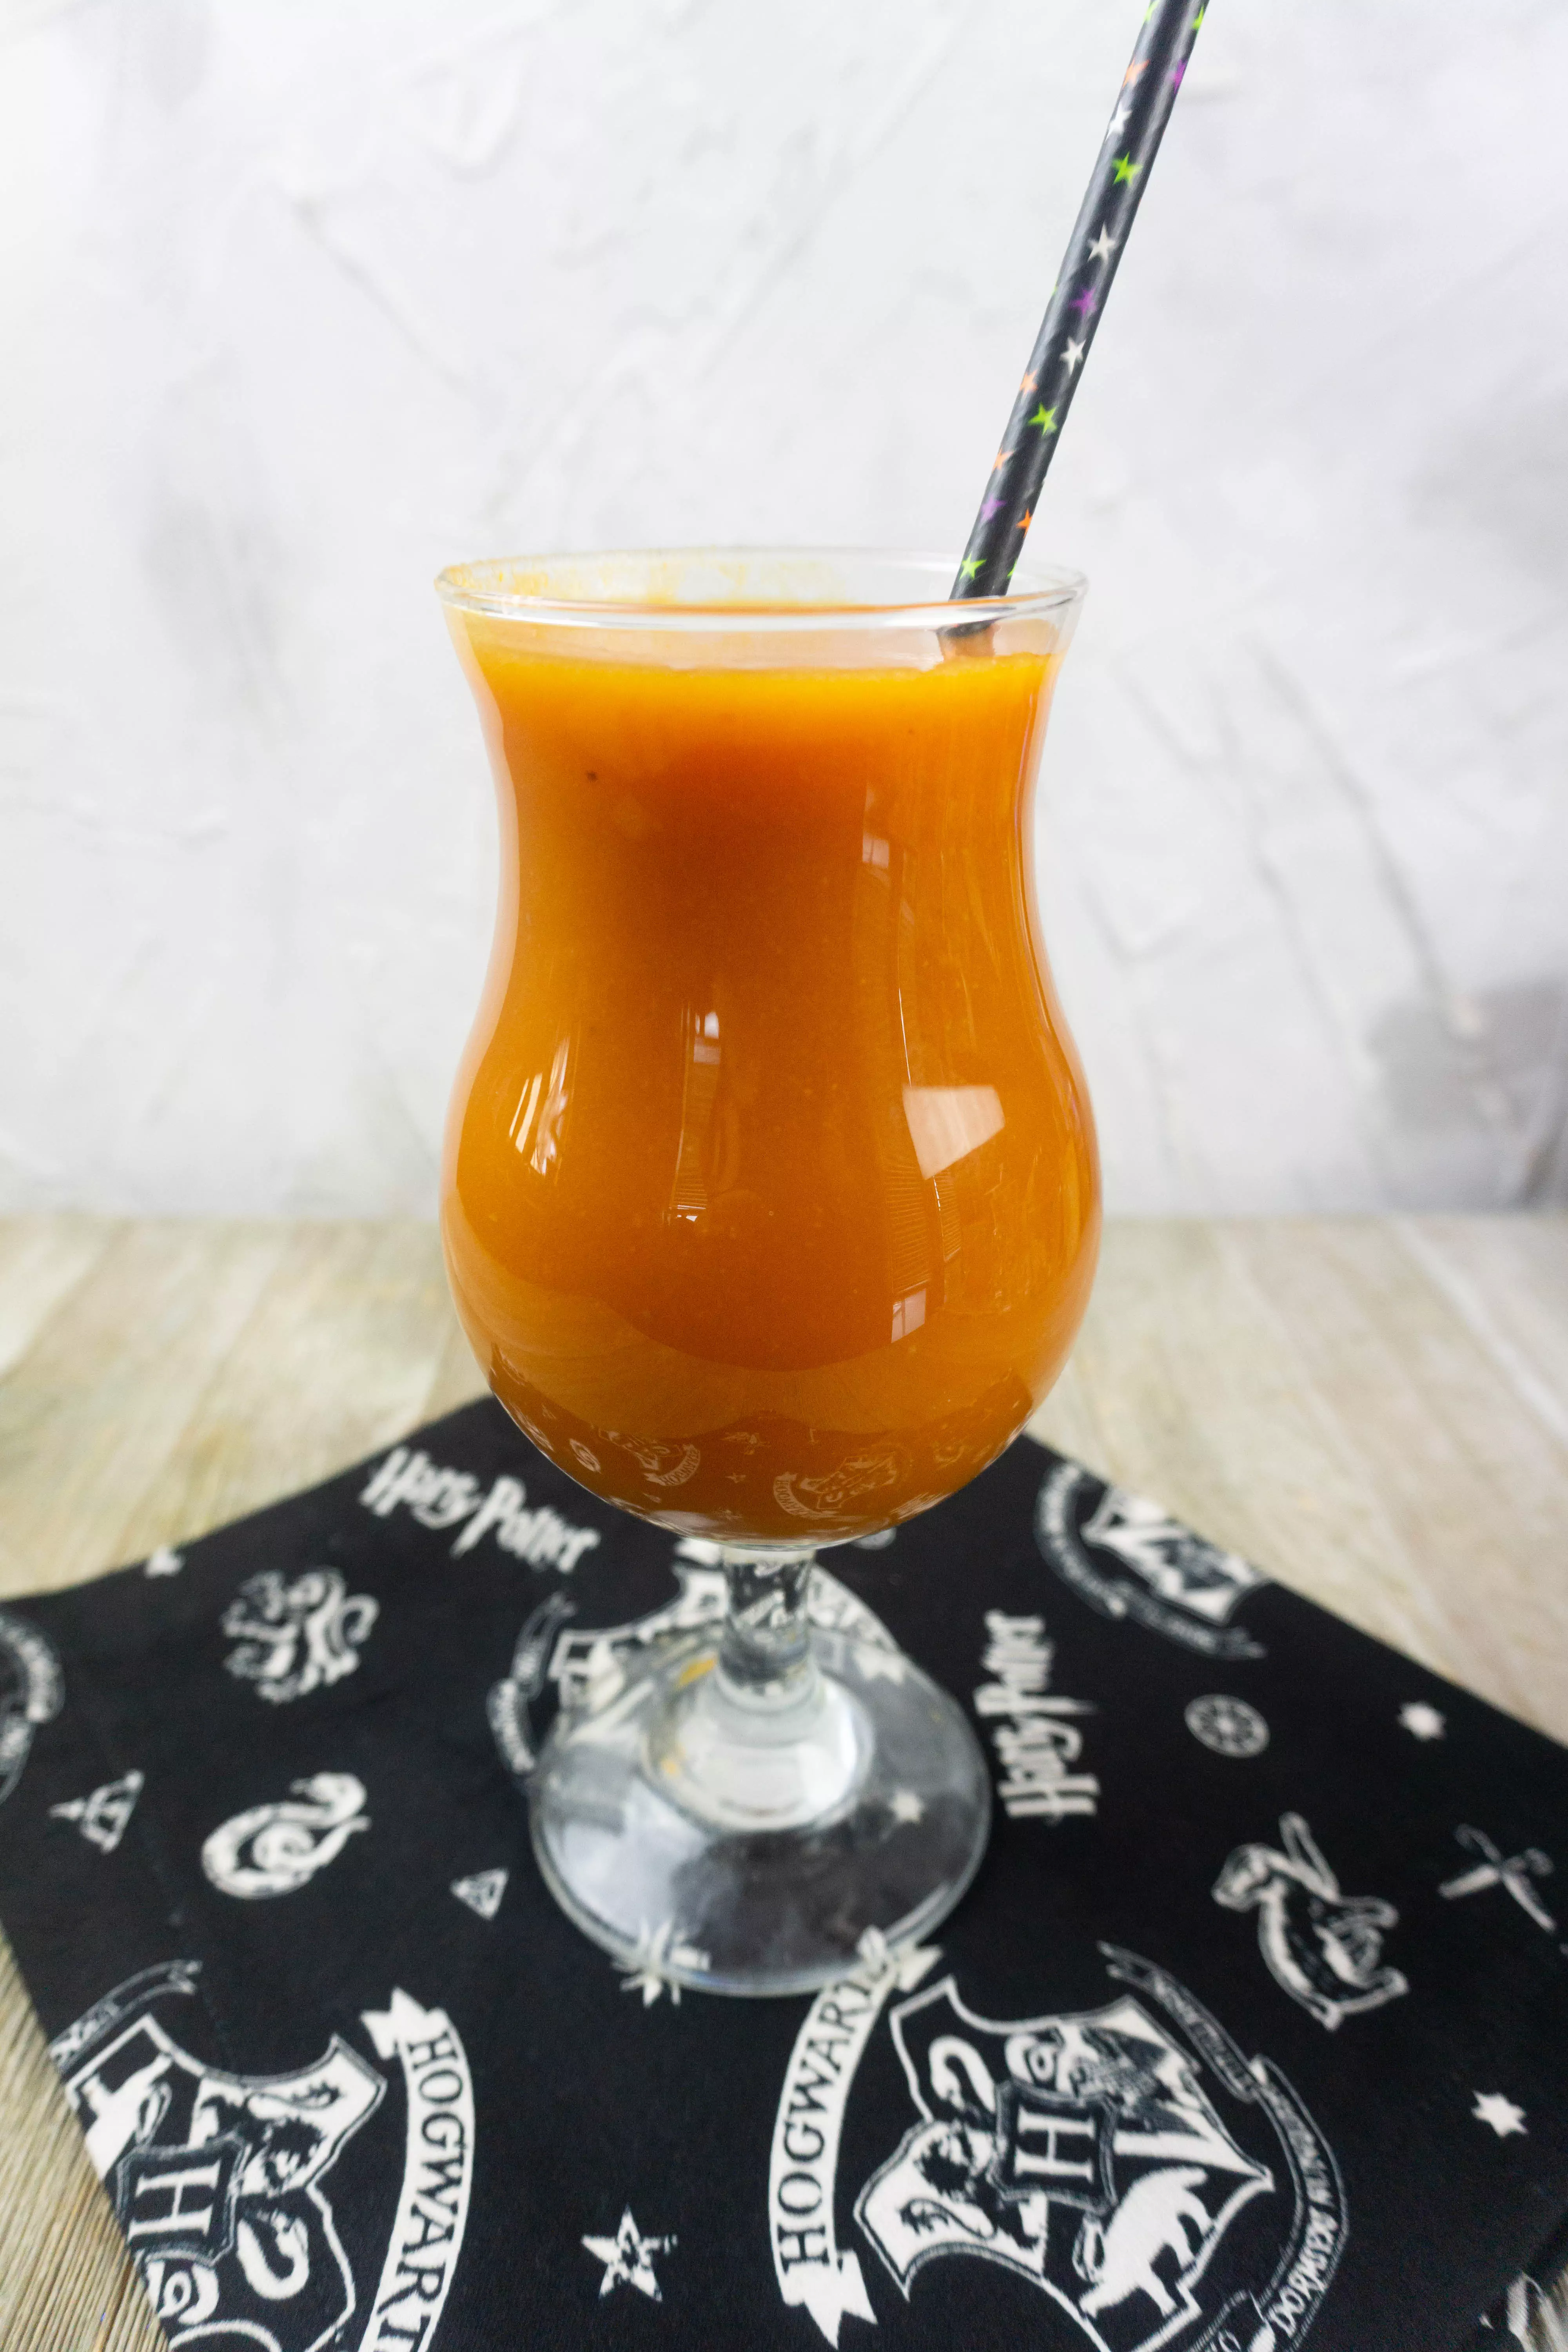 delicious pumpkin-based drink for Harry Potter fans